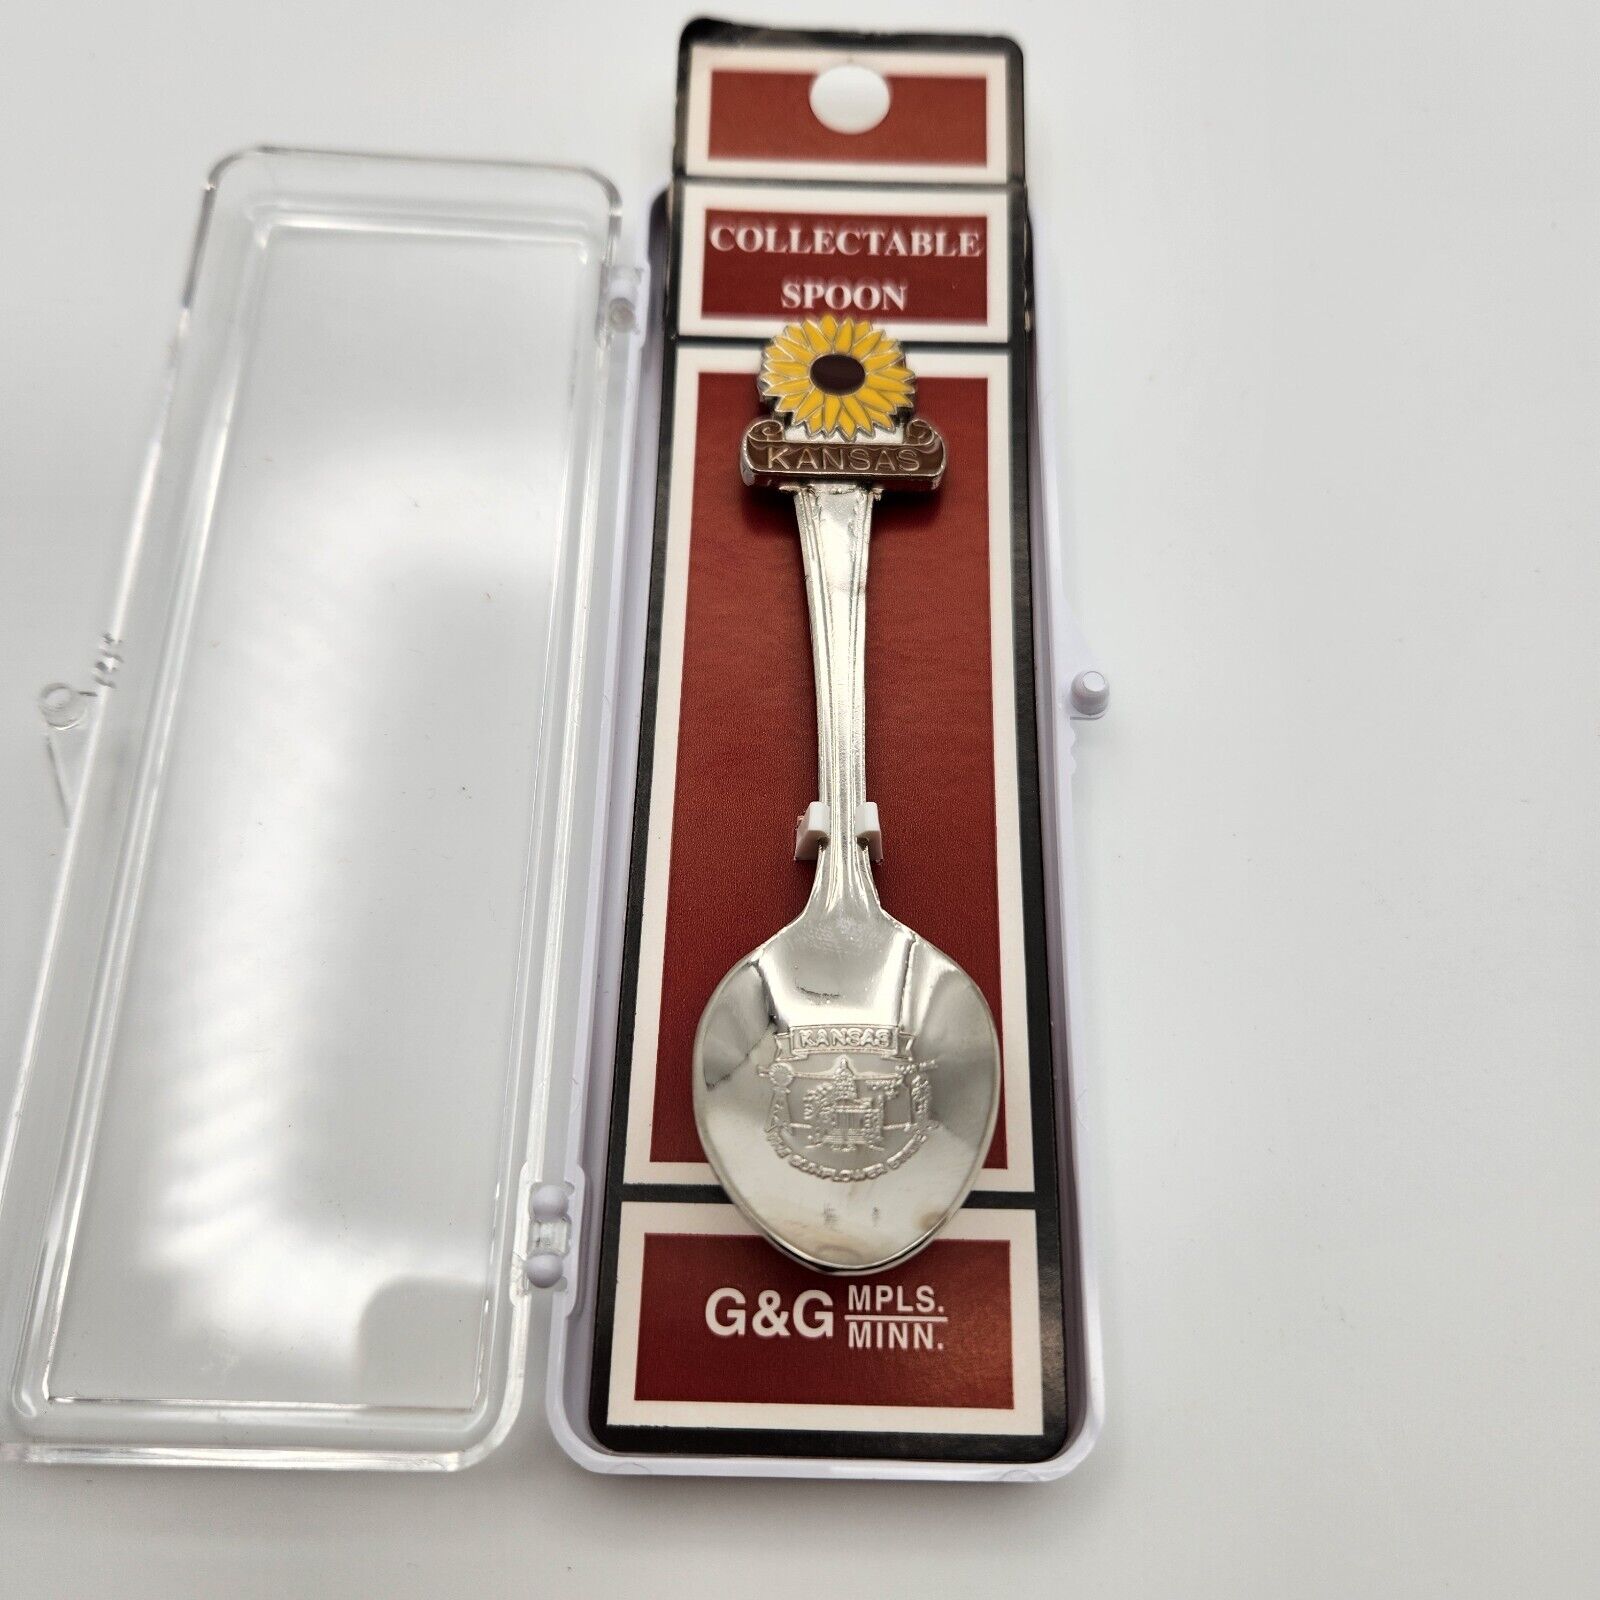 Kansas THE SUNFLOWER STATE Collector Spoon Demitasse Tea G&G in Case